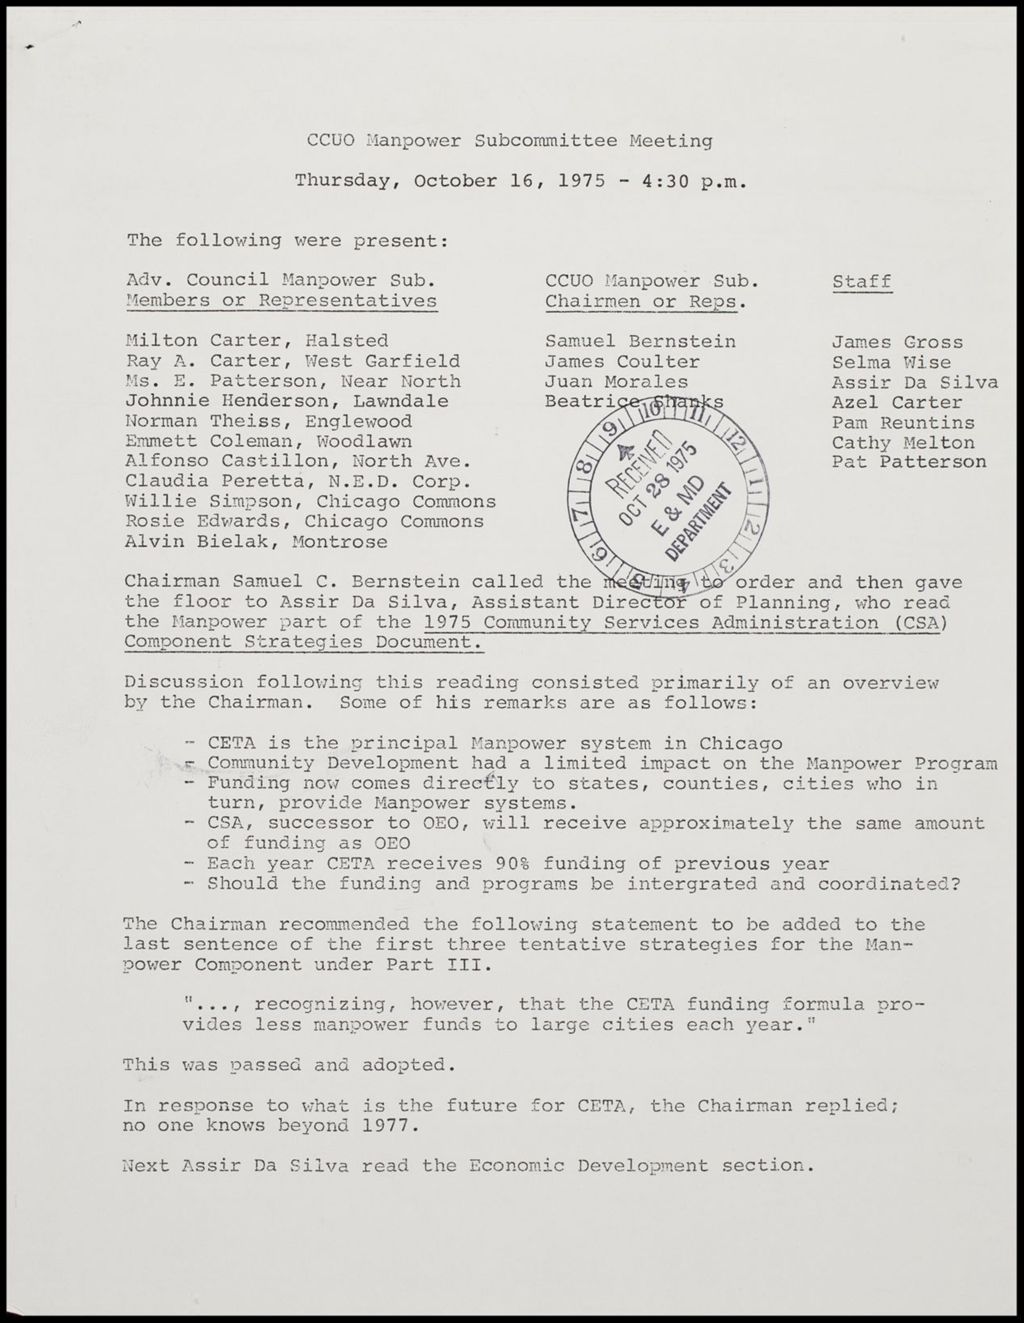 Miniature of Manpower Subcommittee Meeting, undated (Folder II-1005)